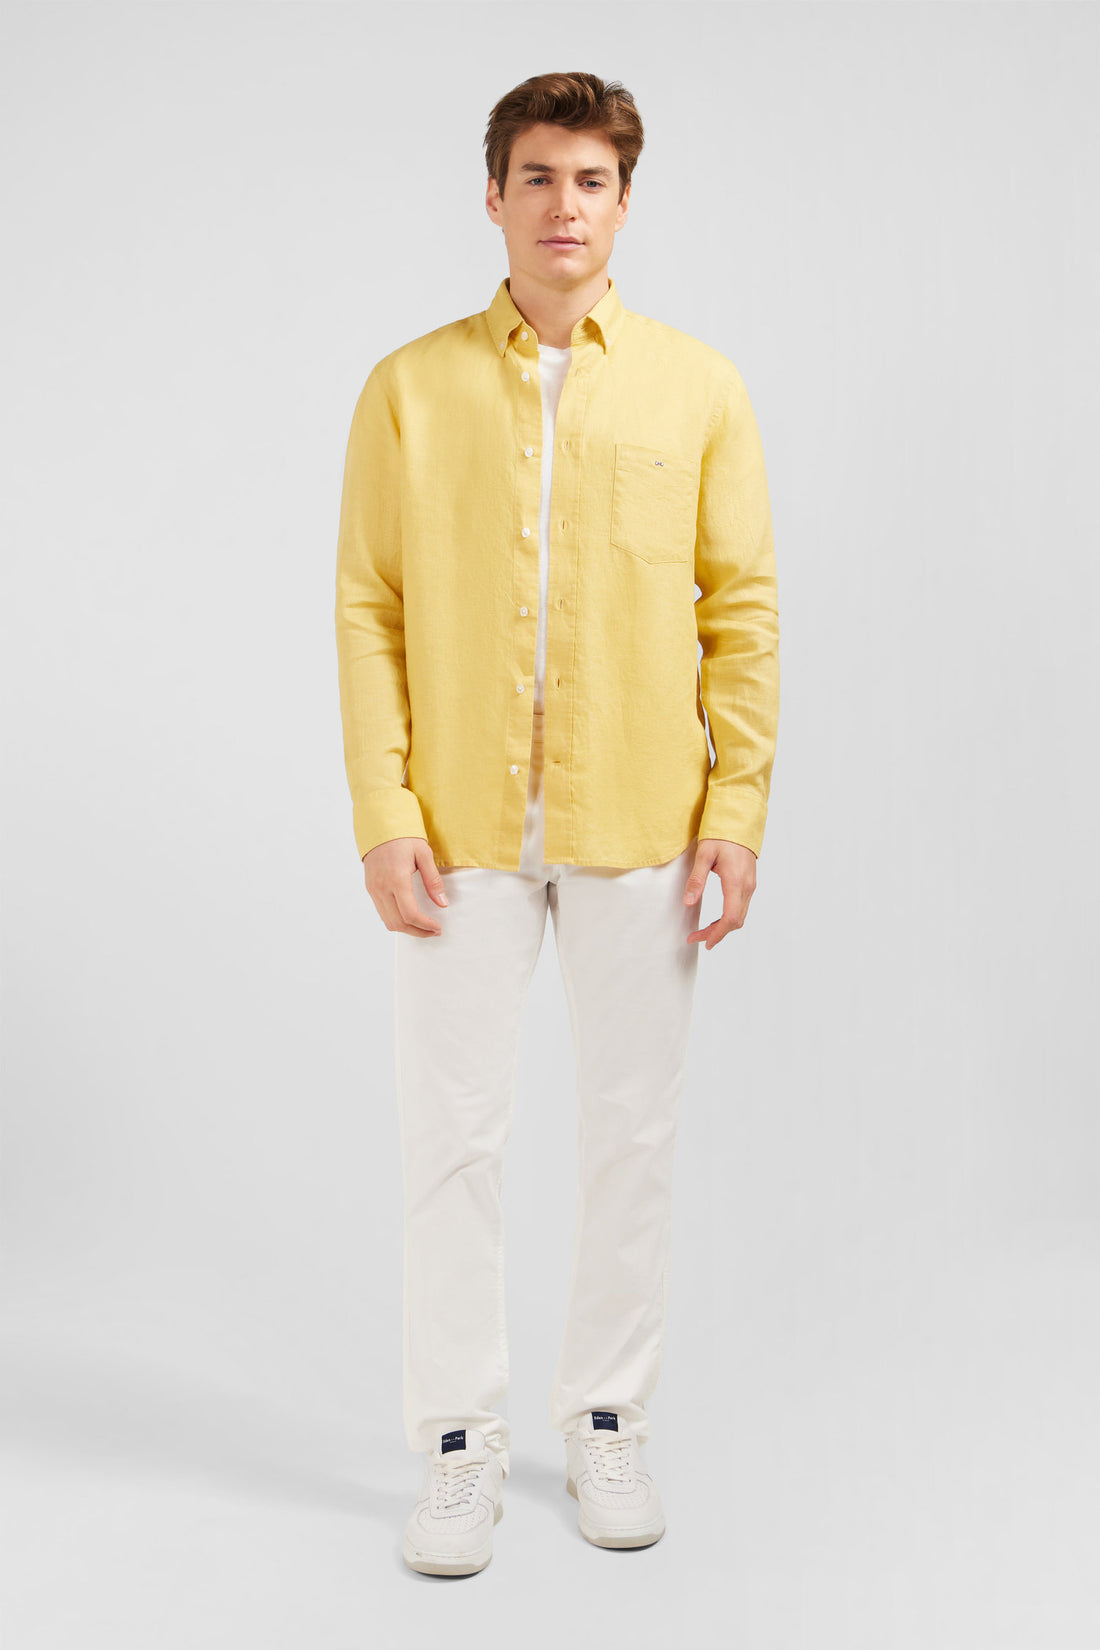 Plain Yellow Linen Shirt_E24Checl0005_Jac9_01